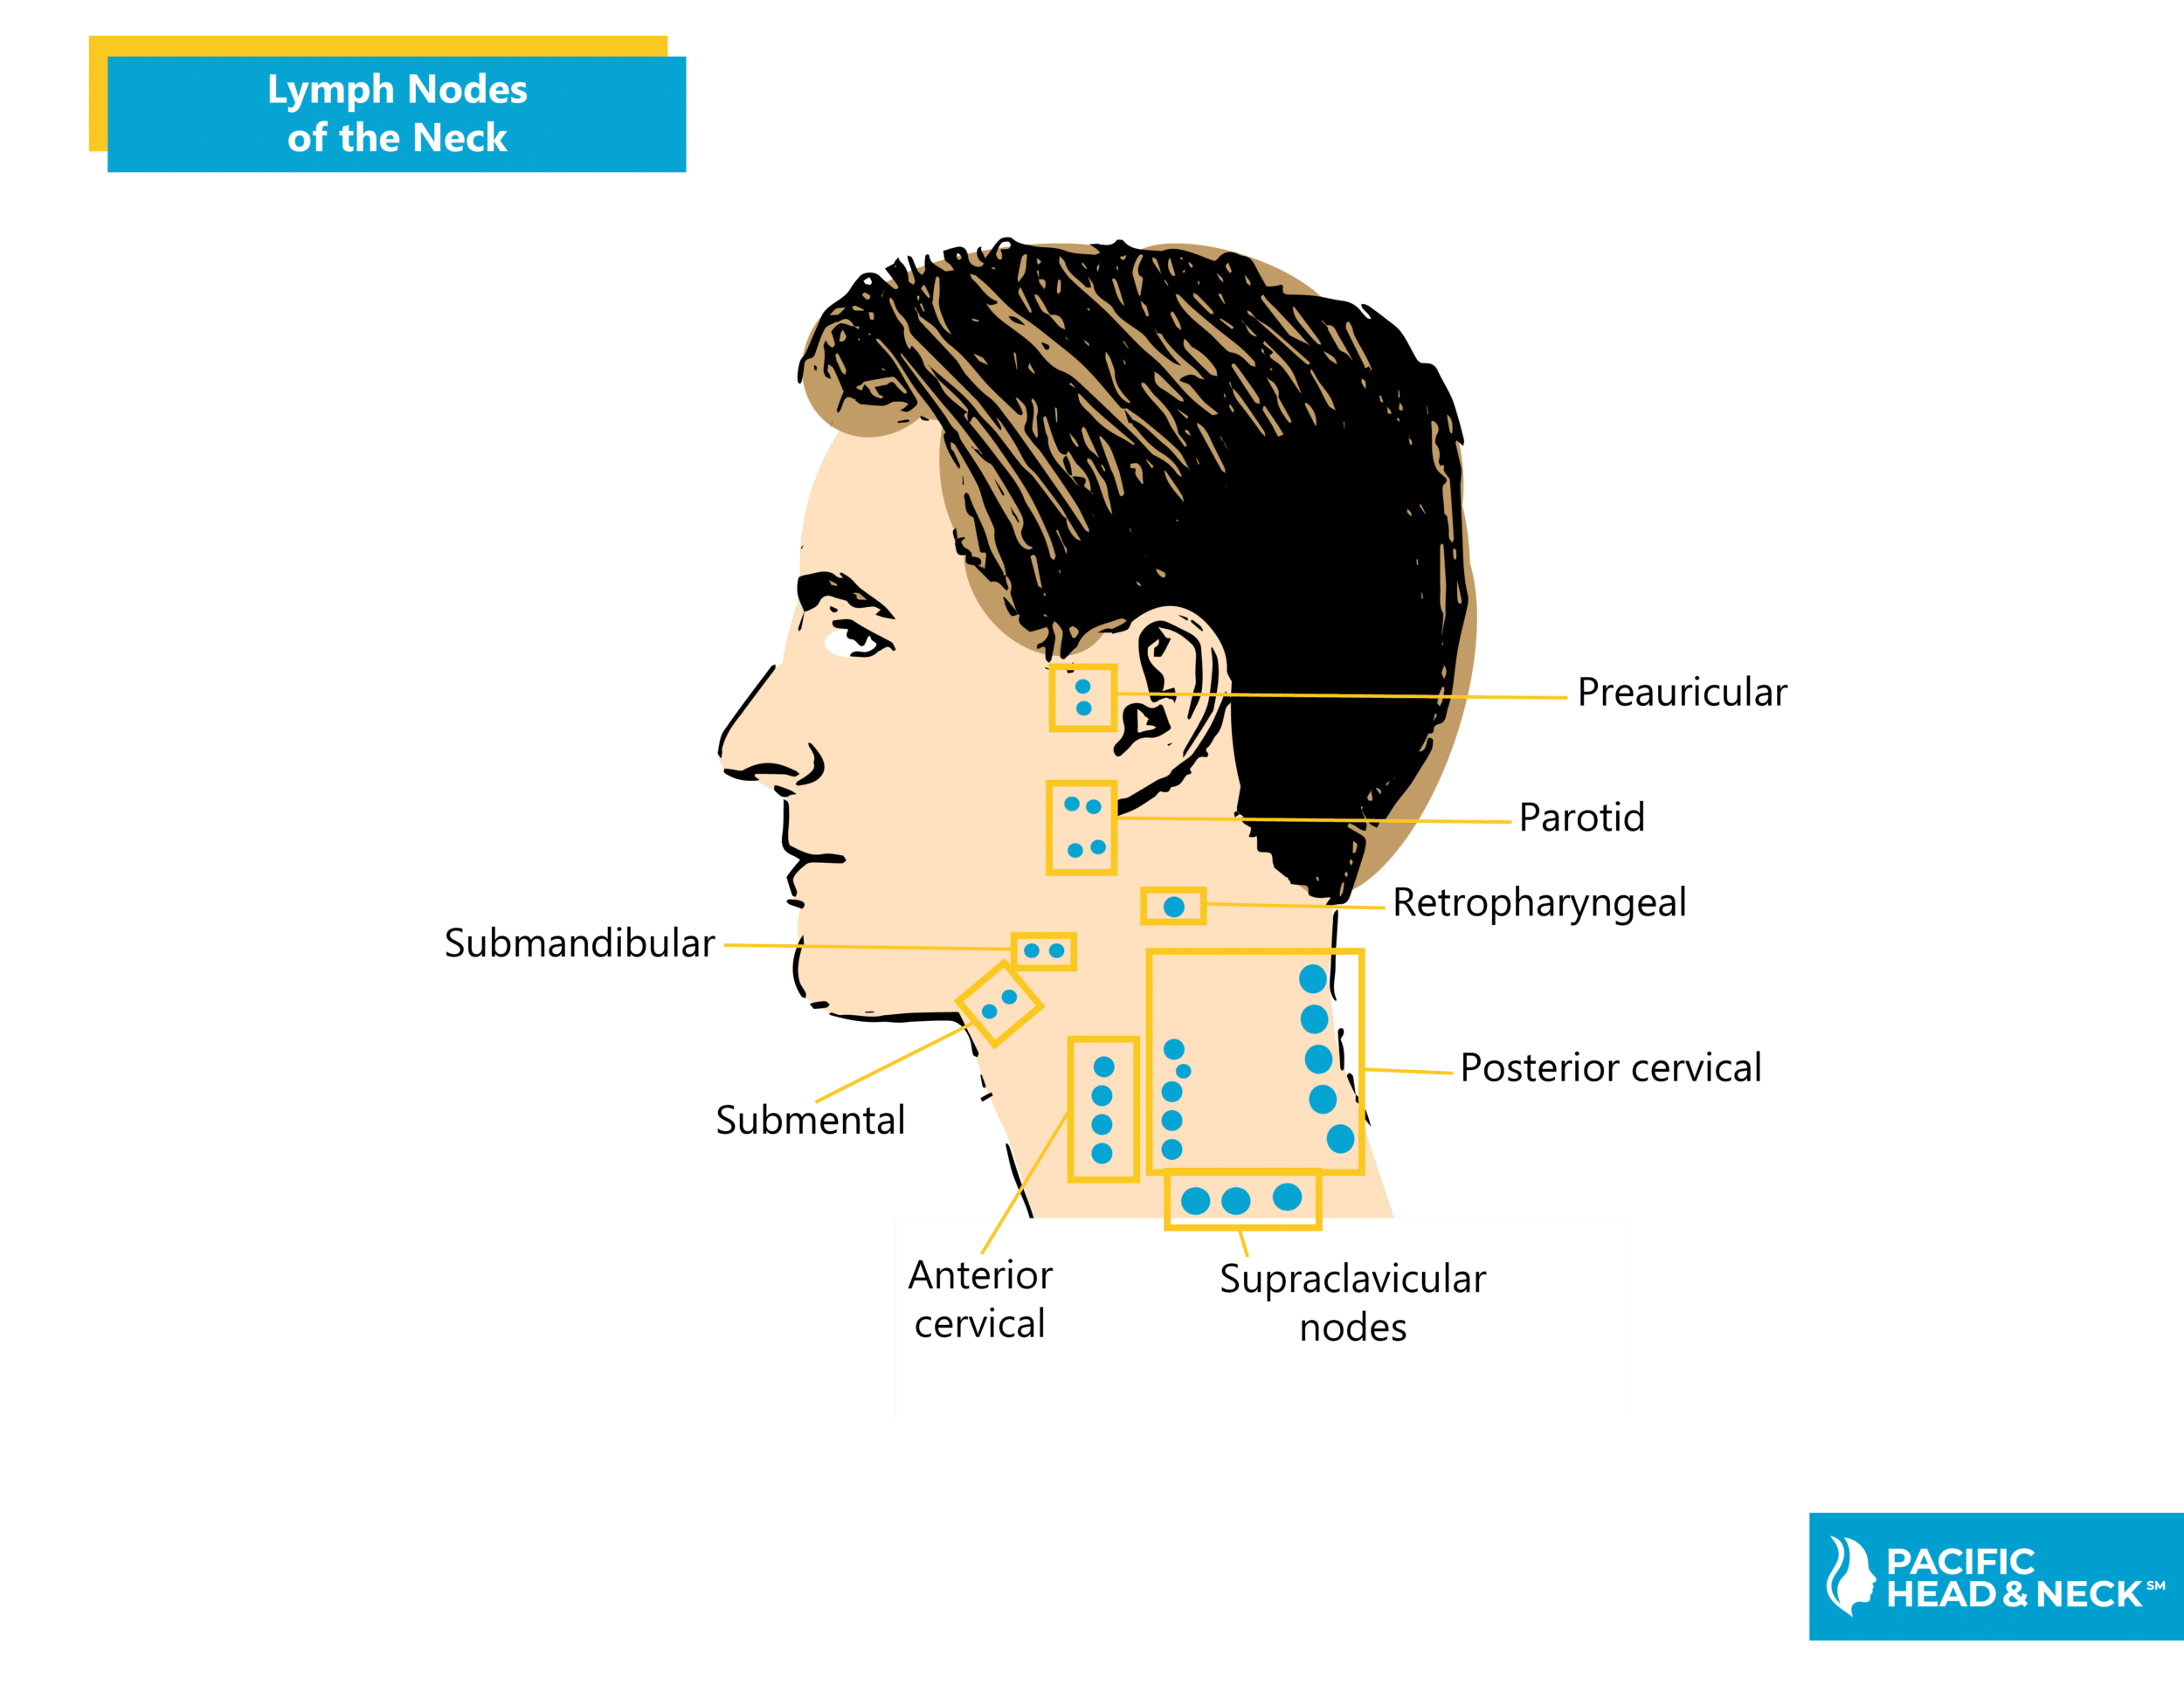 pain on lymph node back of head